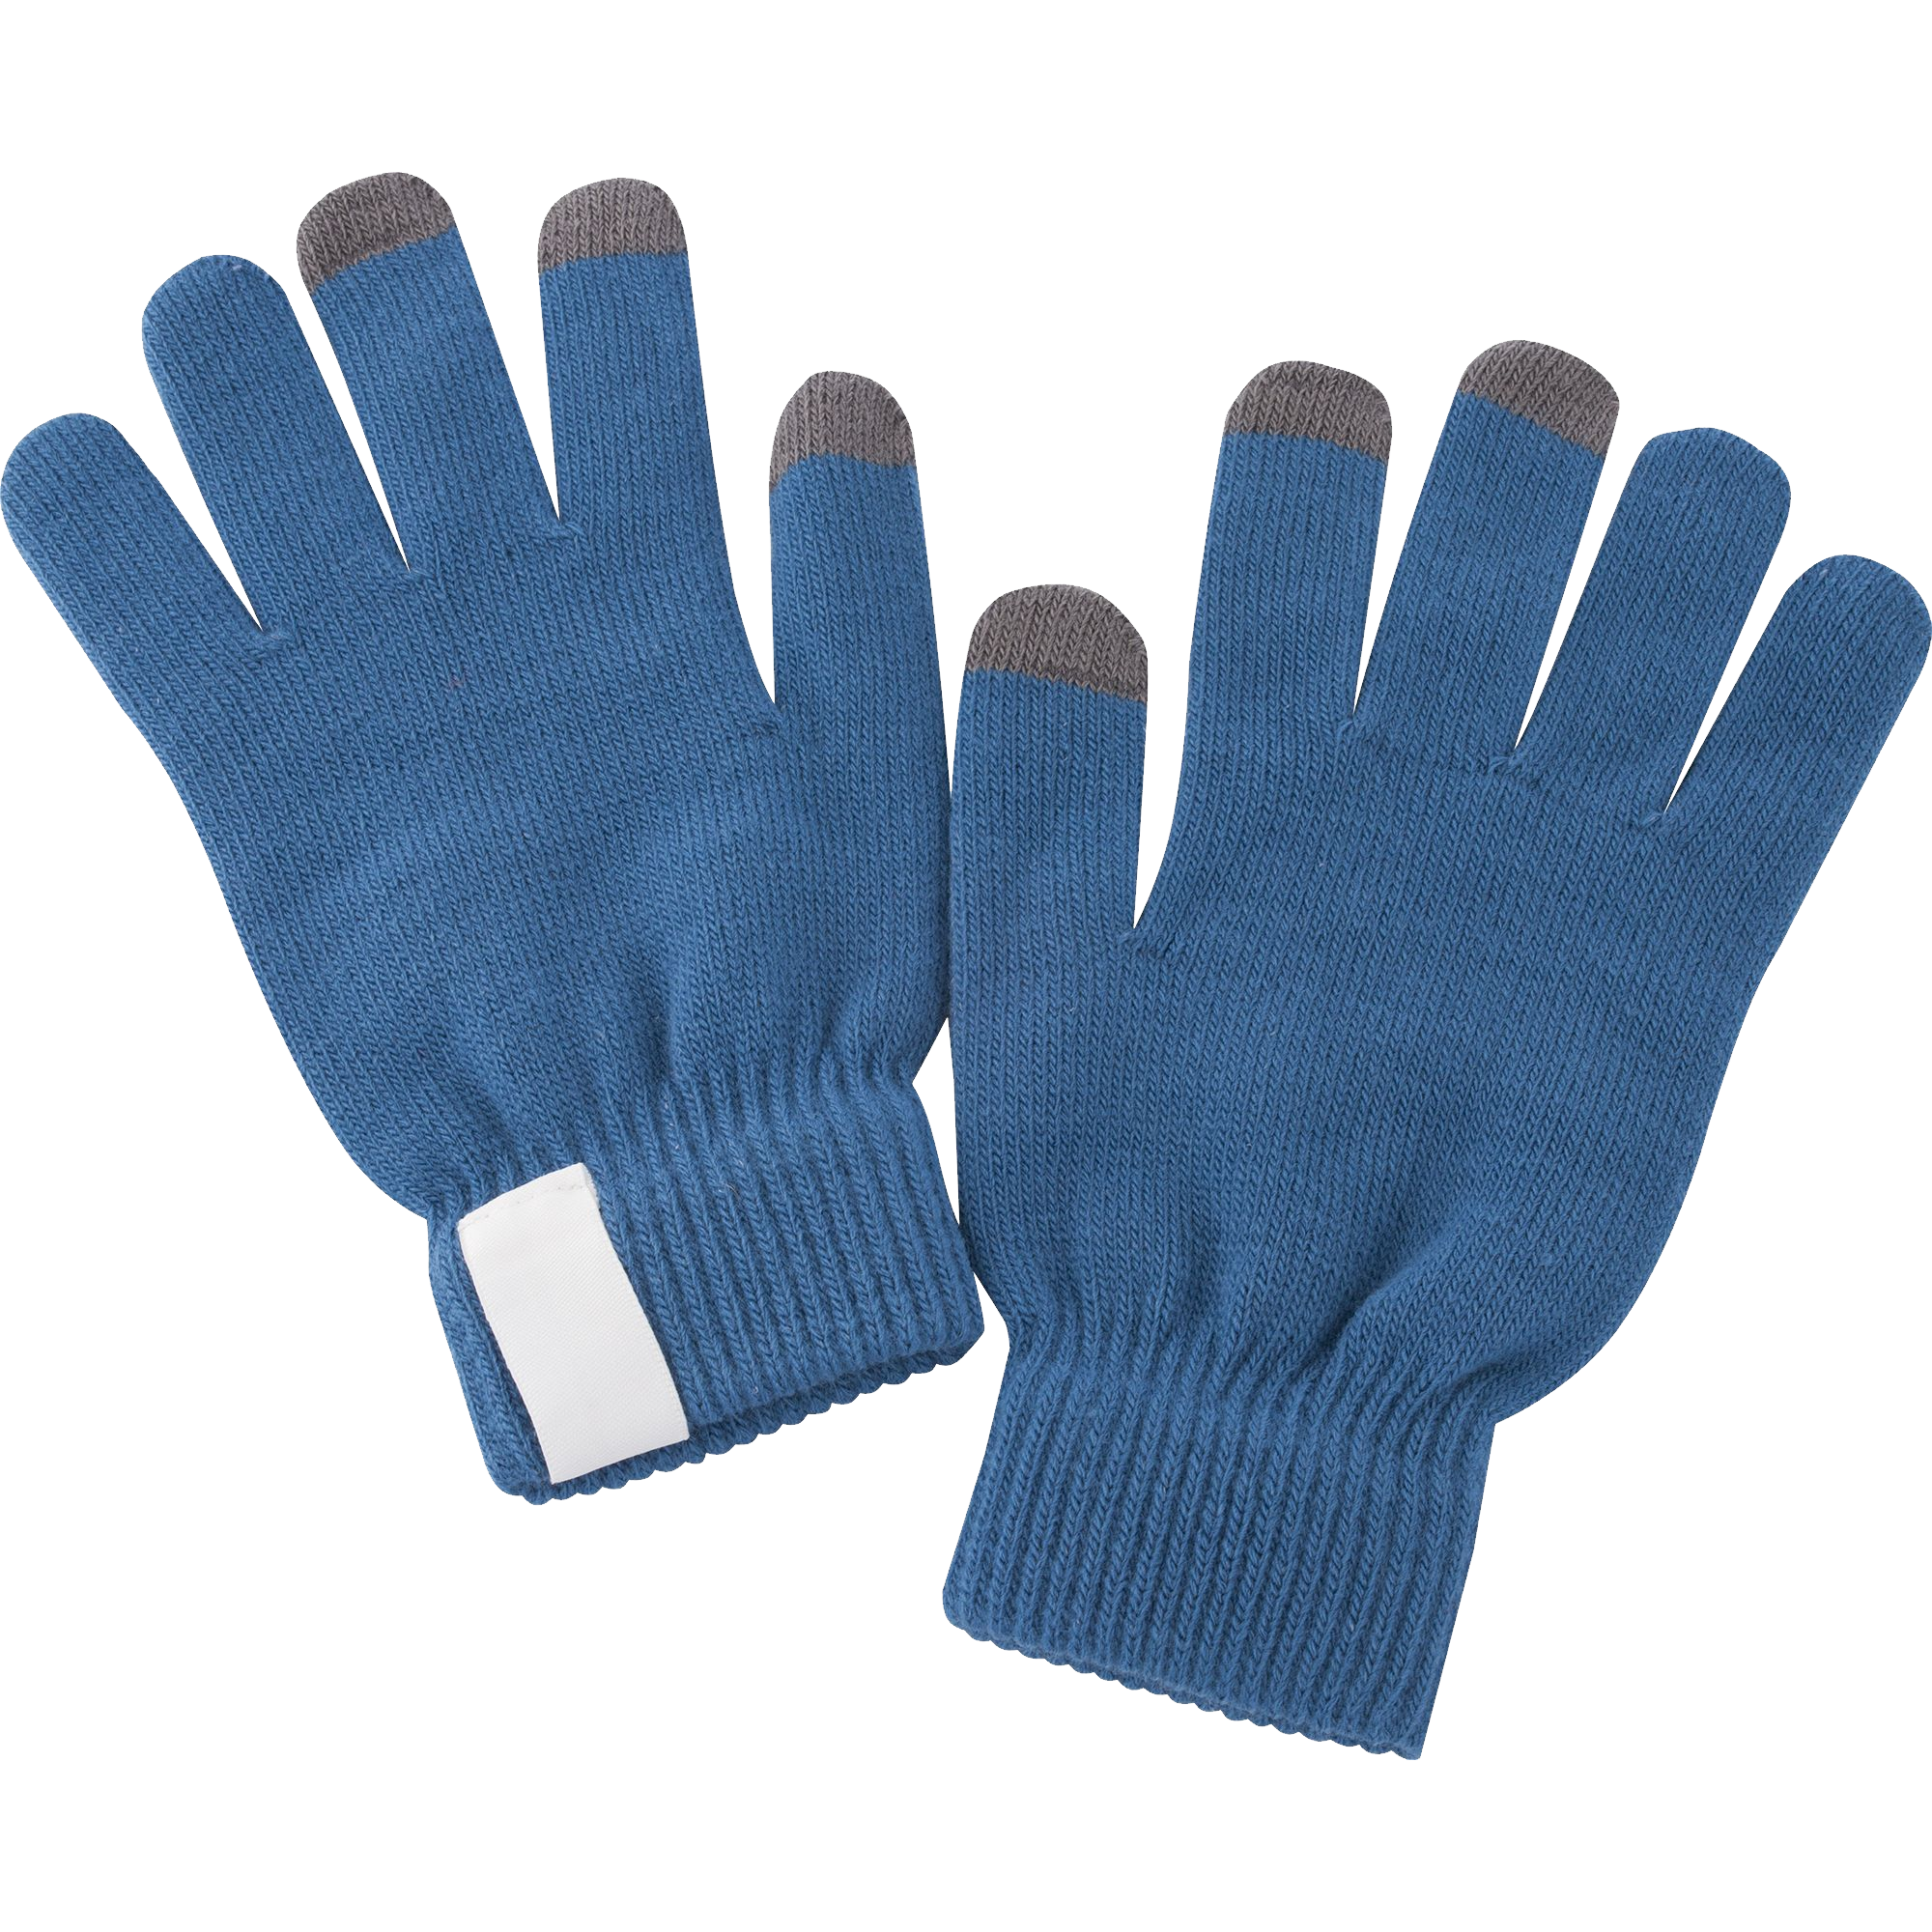 Gloves  Transparent Gallery